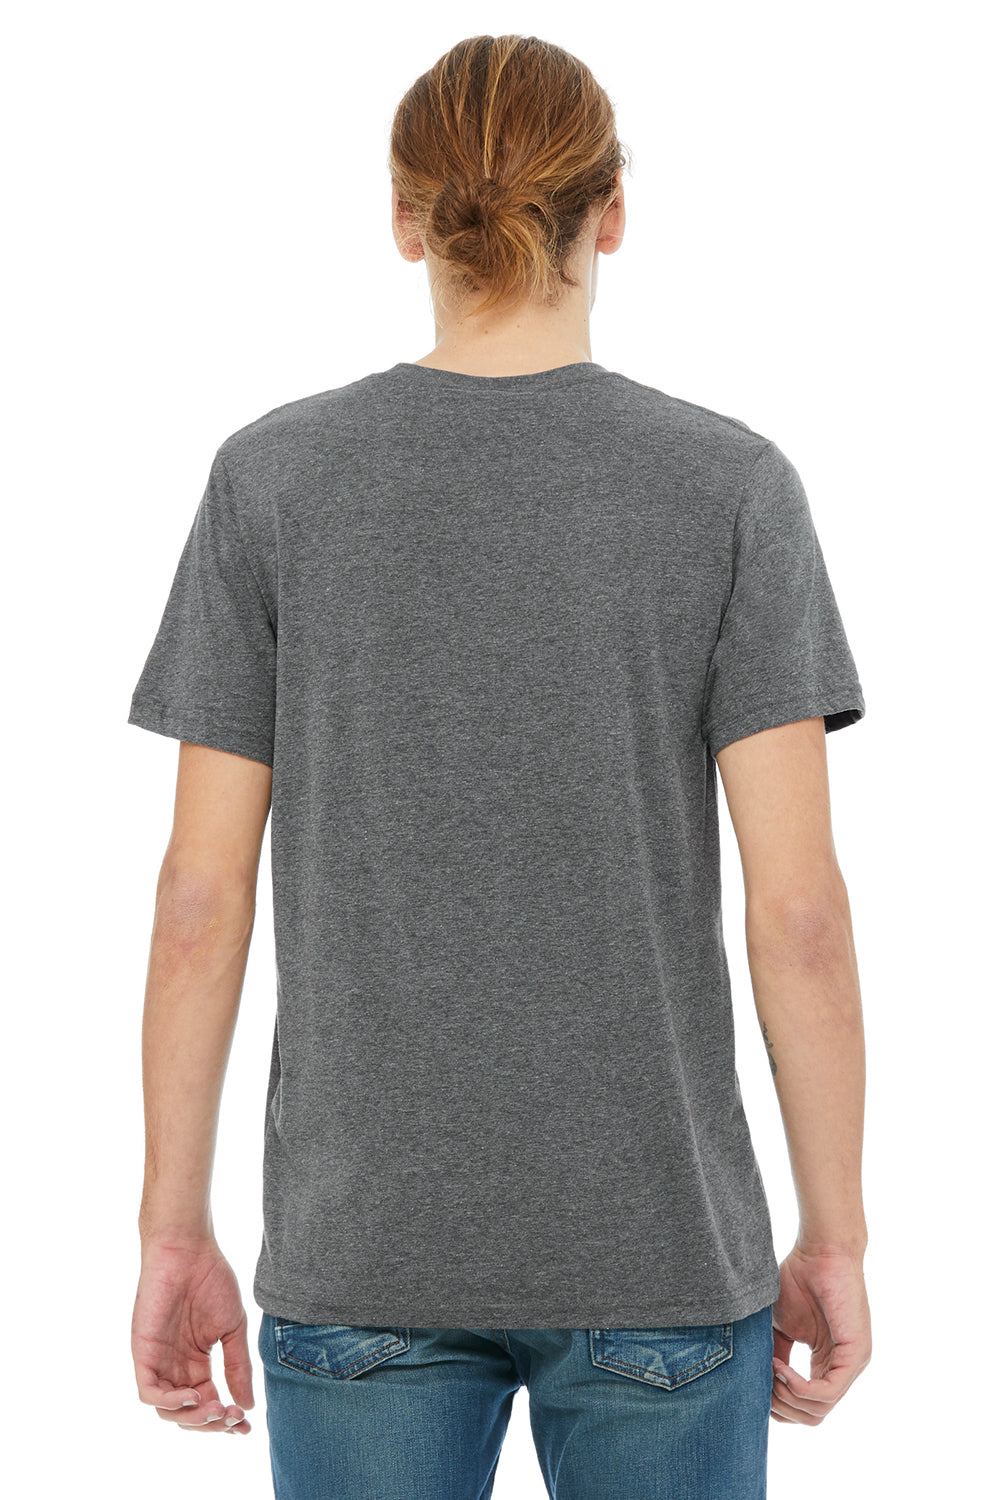 Bella + Canvas 3021 Mens Jersey Short Sleeve Crewneck T-Shirt w/ Pocket Heather Deep Grey Back